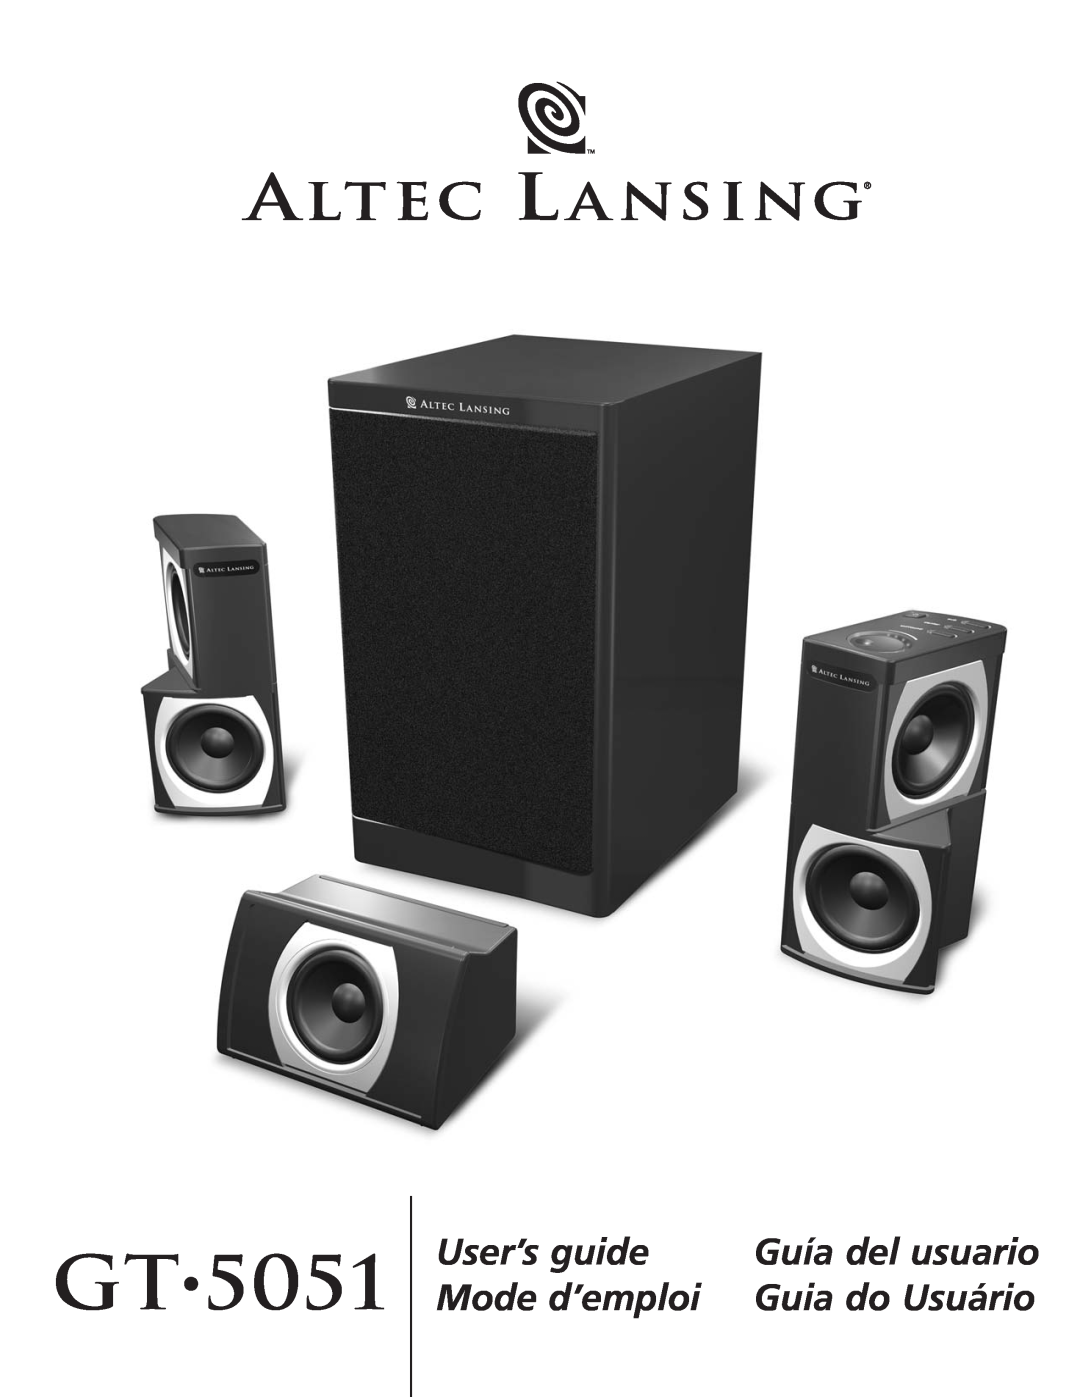 Altec Lansing GT5051 manual Gt, User’s guide, Mode d’emploi, Guía del usuario, Guia do Usuário 